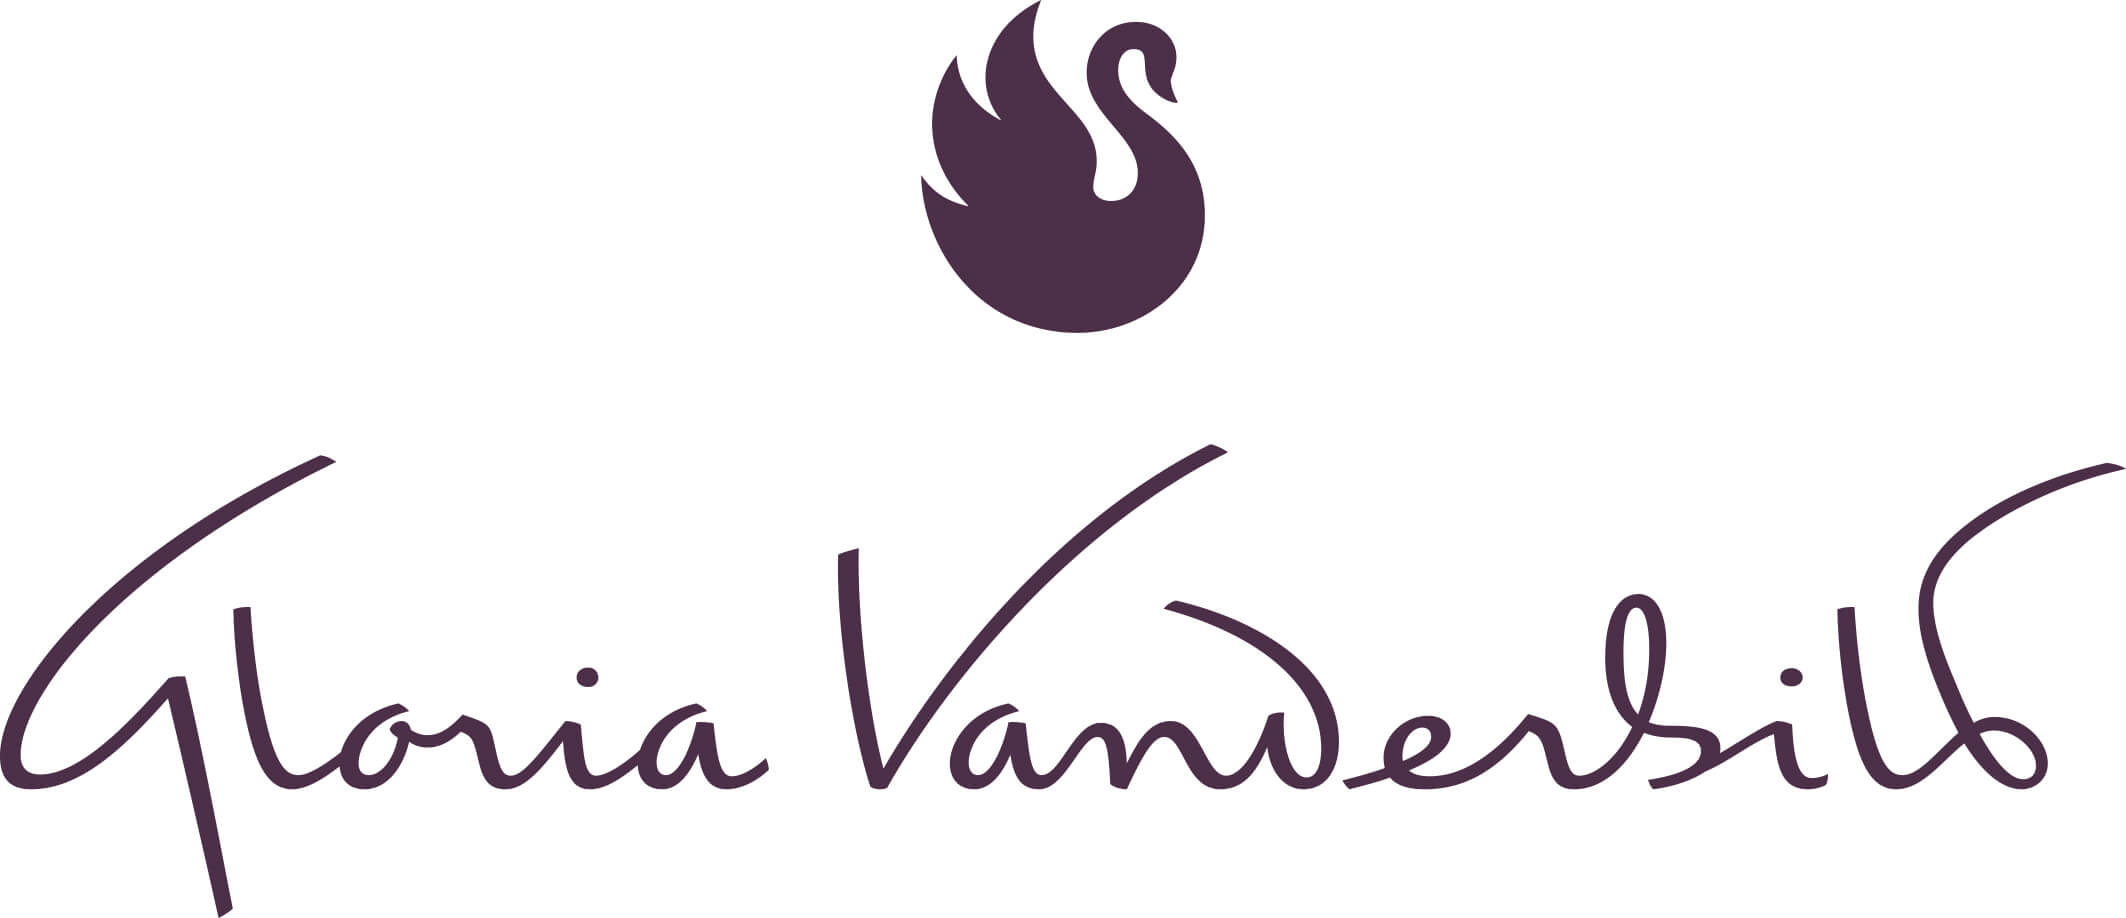 Gloria Vanderbilt Expands Licensing Program image